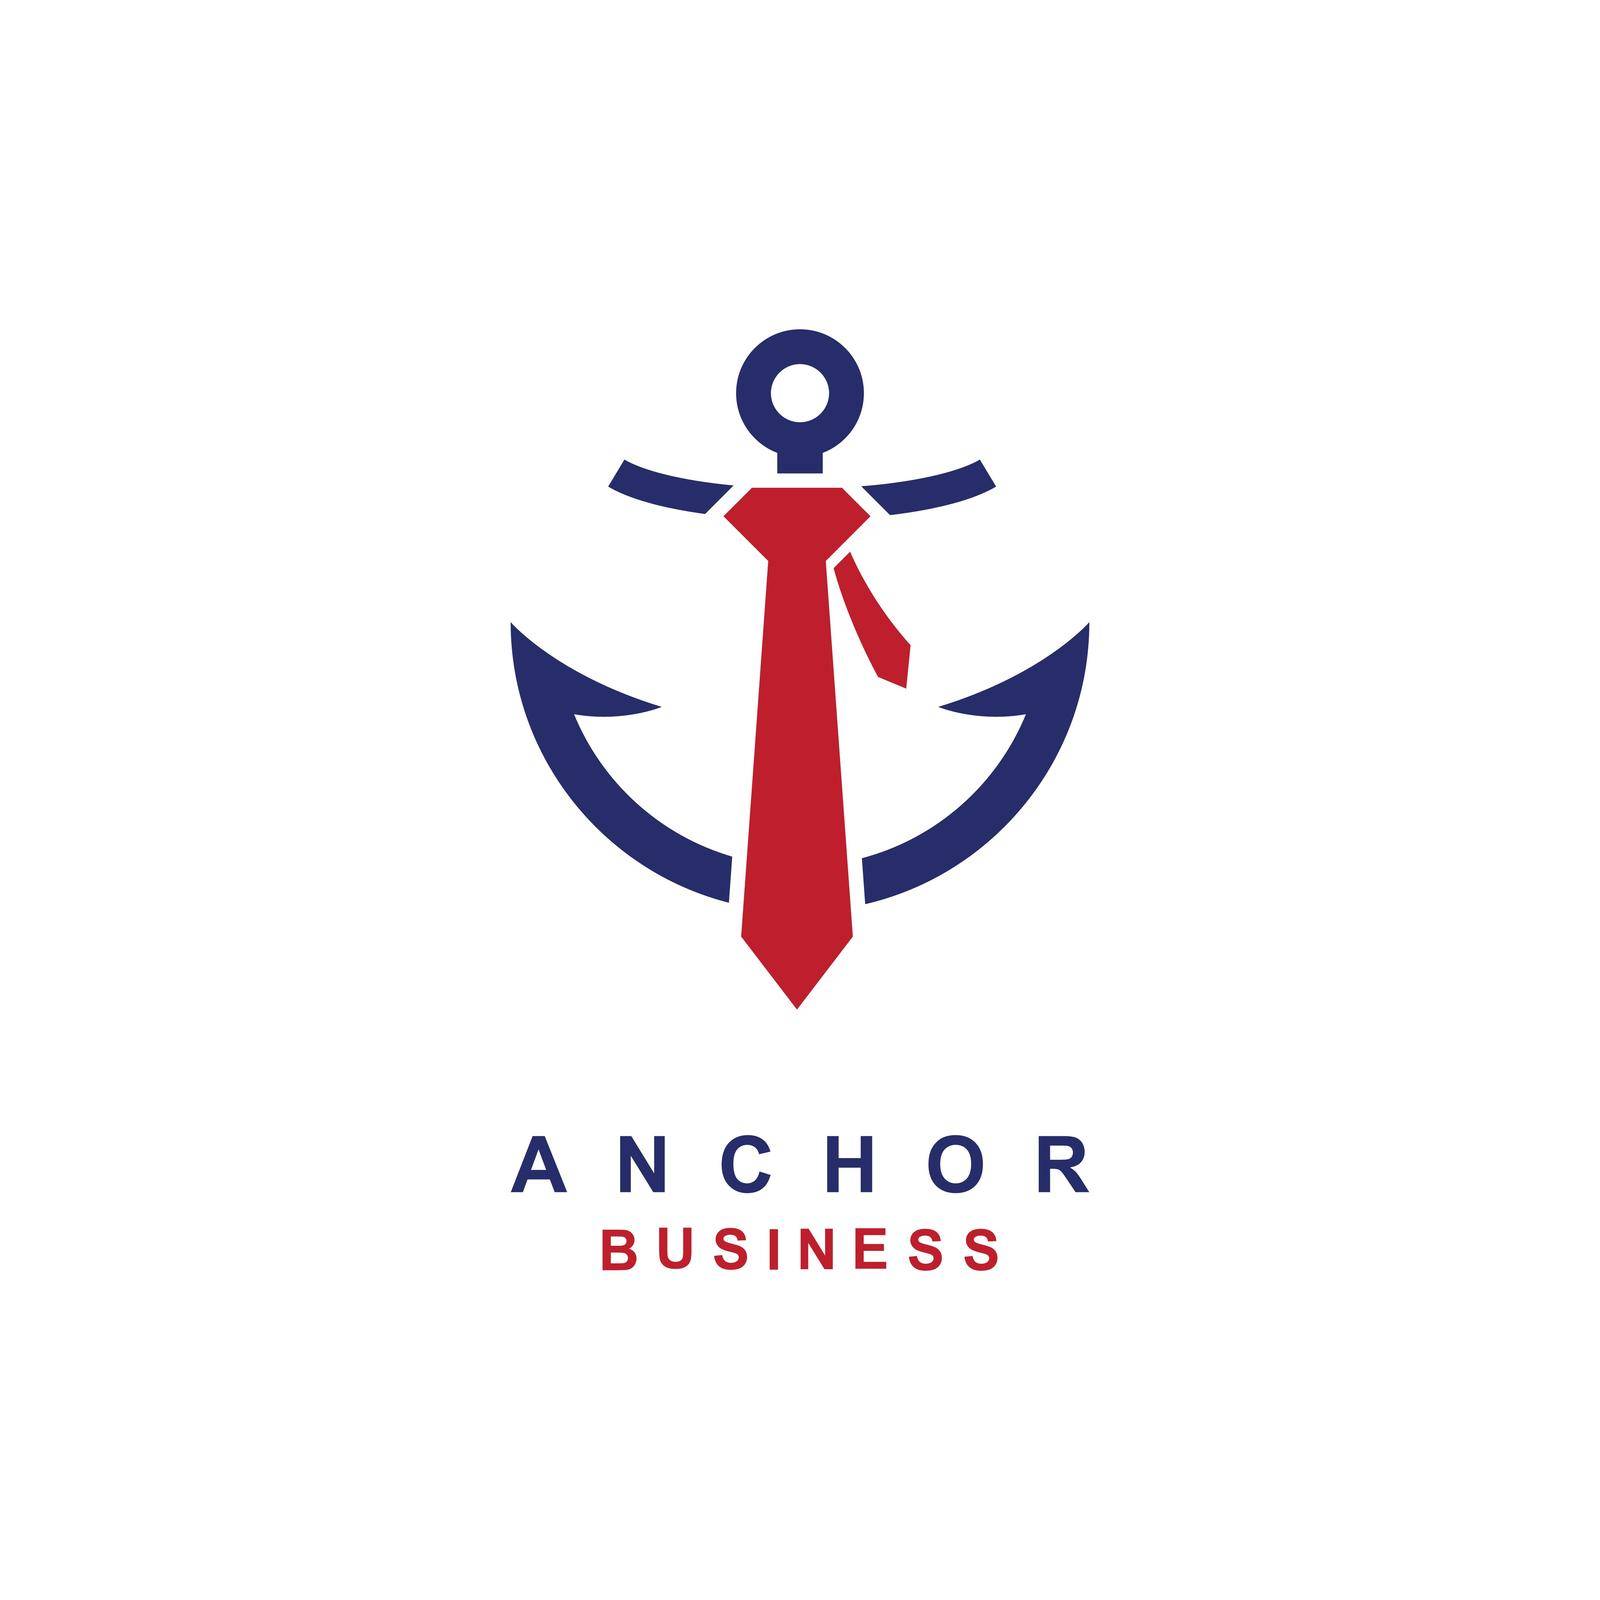 Anchor illustration design by awk